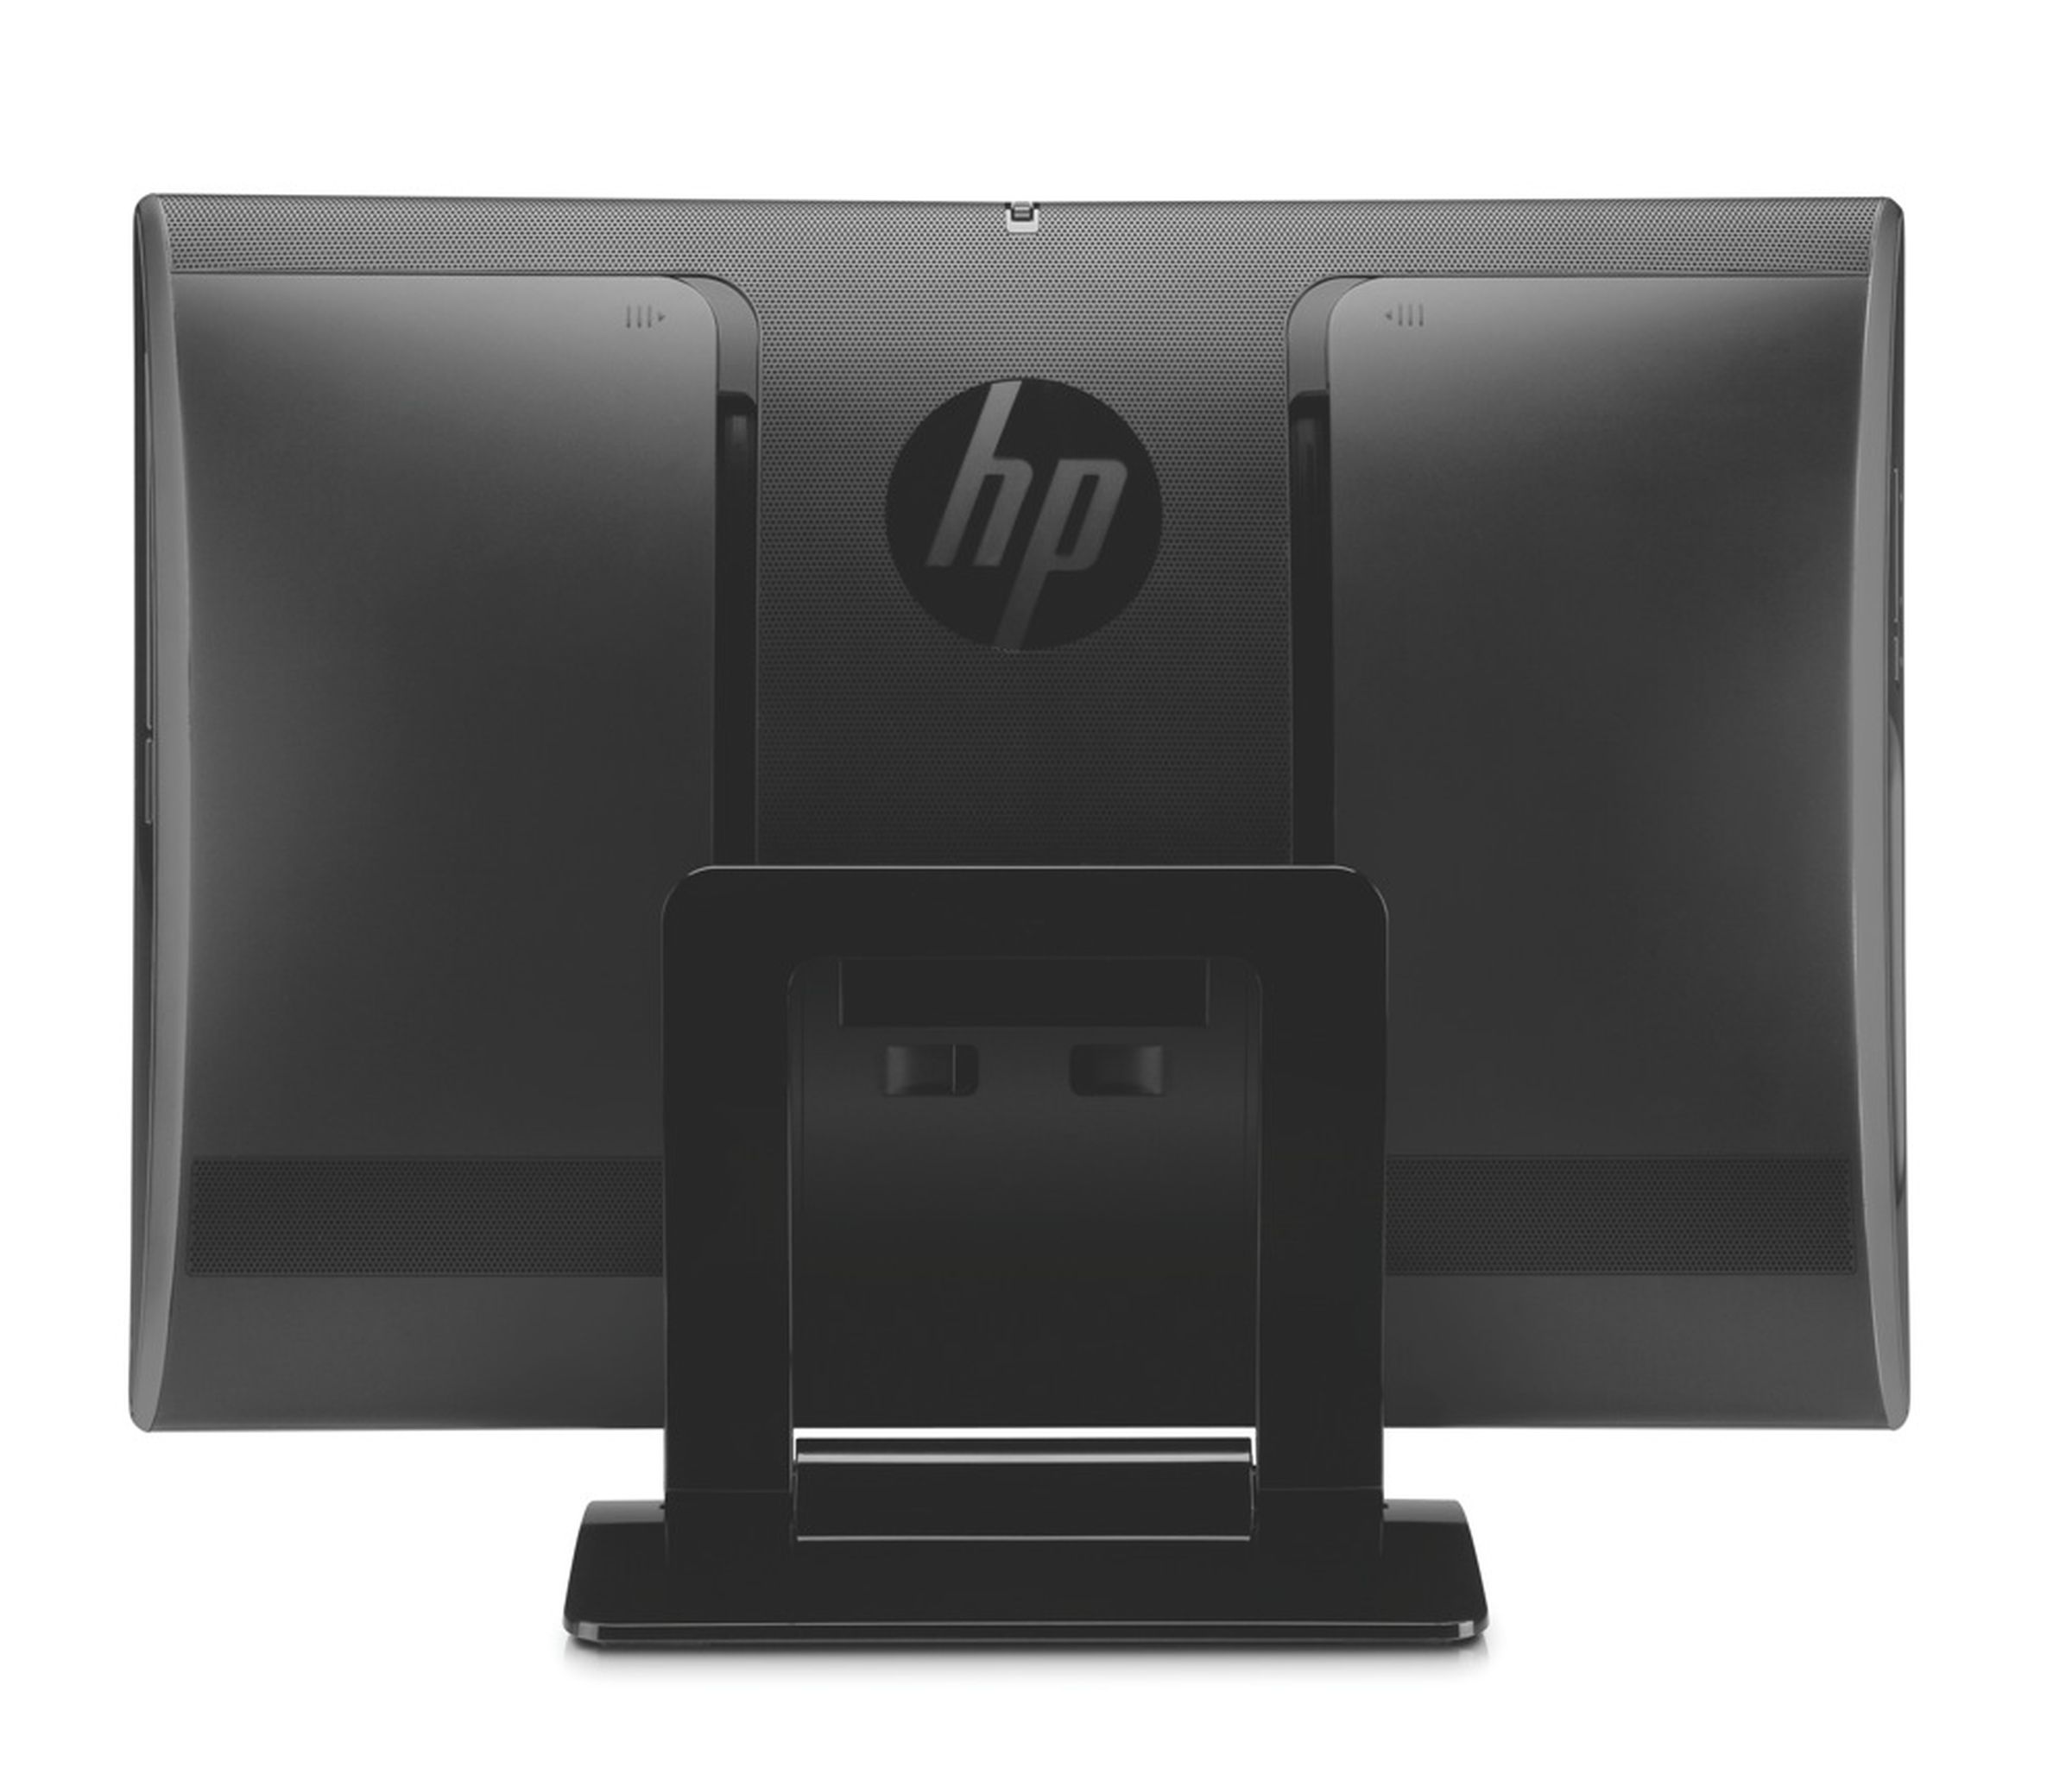 HP TouchSmart 620 3D PC and 2311gt 3D monitor press shots 